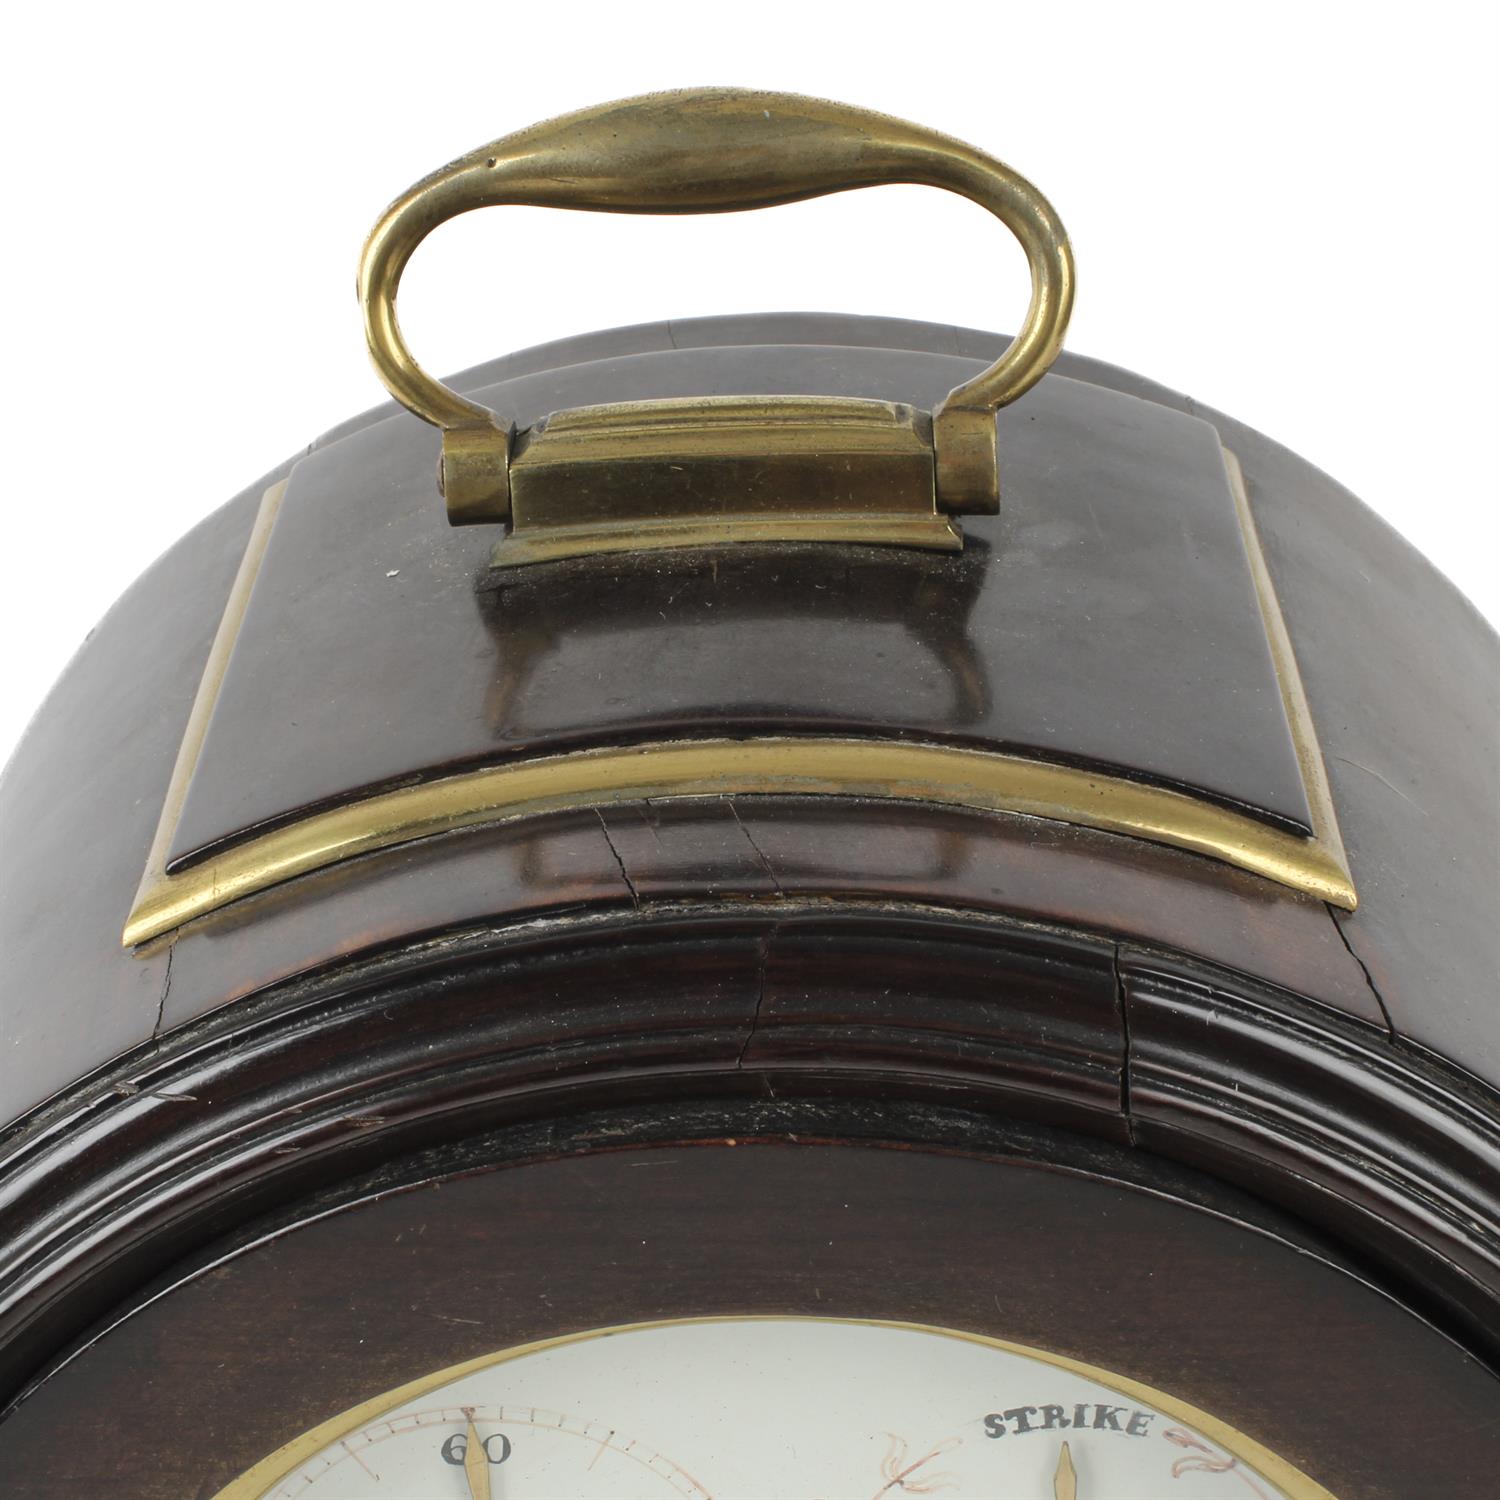 19th Century bracket clock marked Tregent - Image 3 of 7